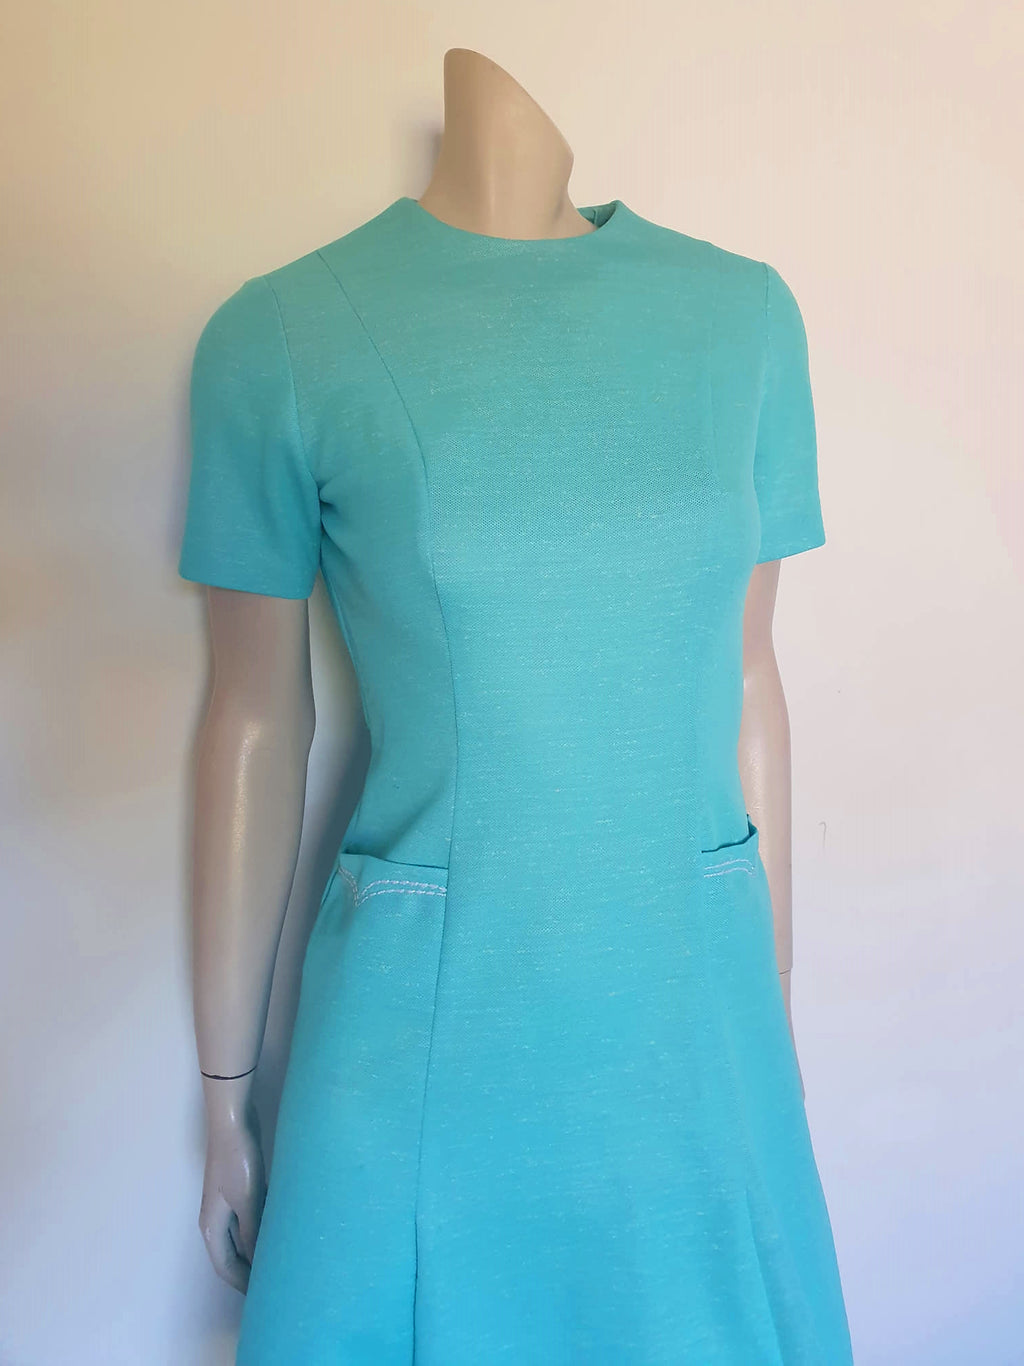 vintage 1960s mod style stretch jersey aqua blue dress small